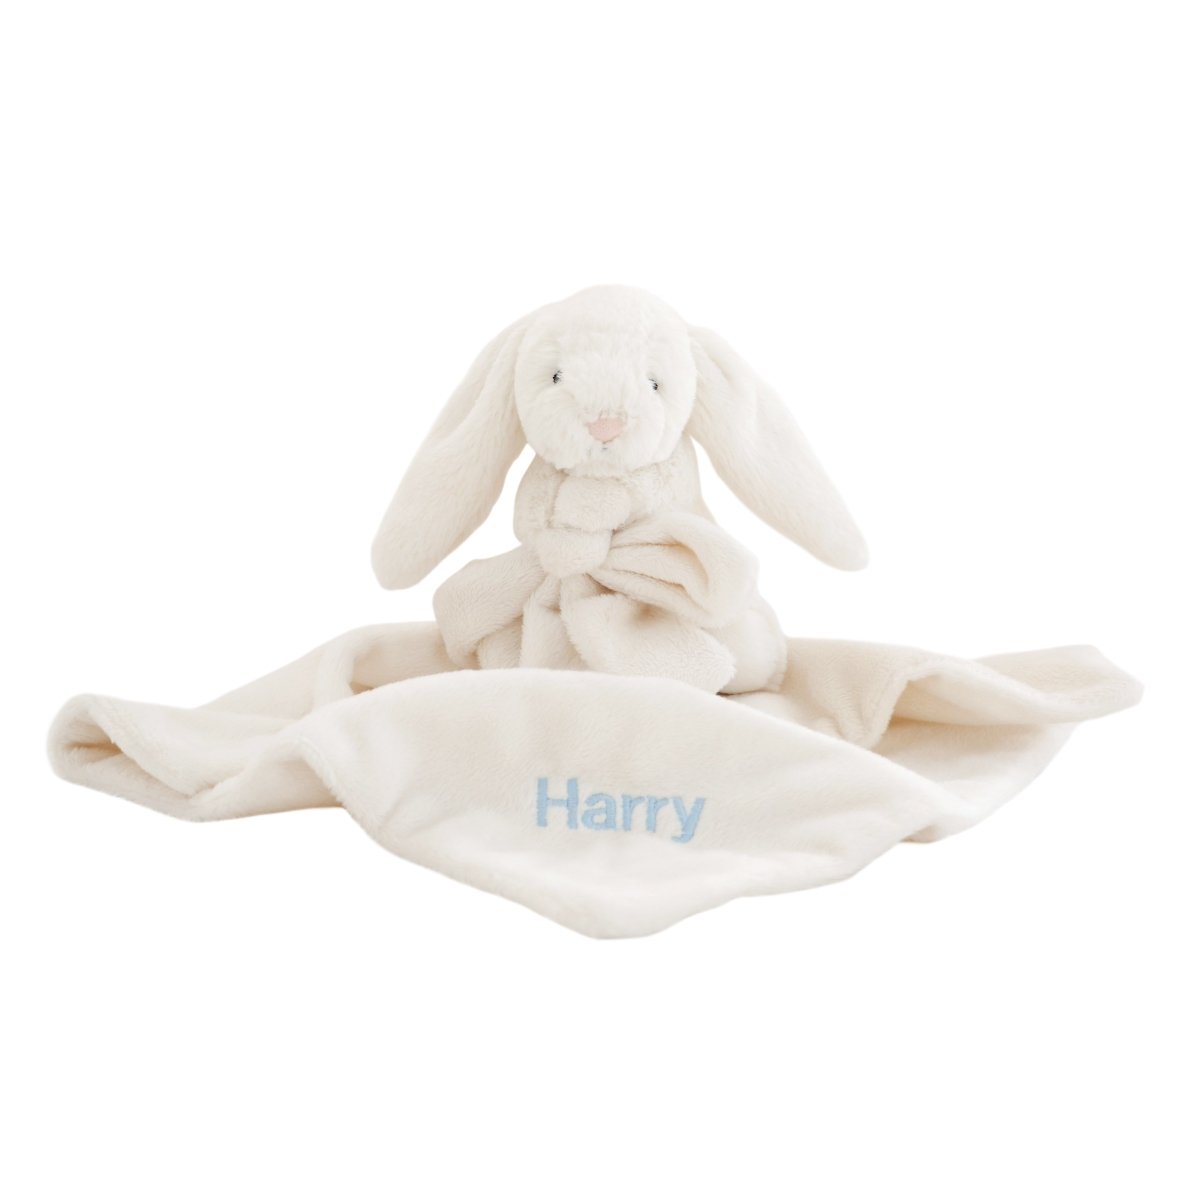 Personalised Bunny Comforter - Cream - LOVINGLY SIGNED (HK)